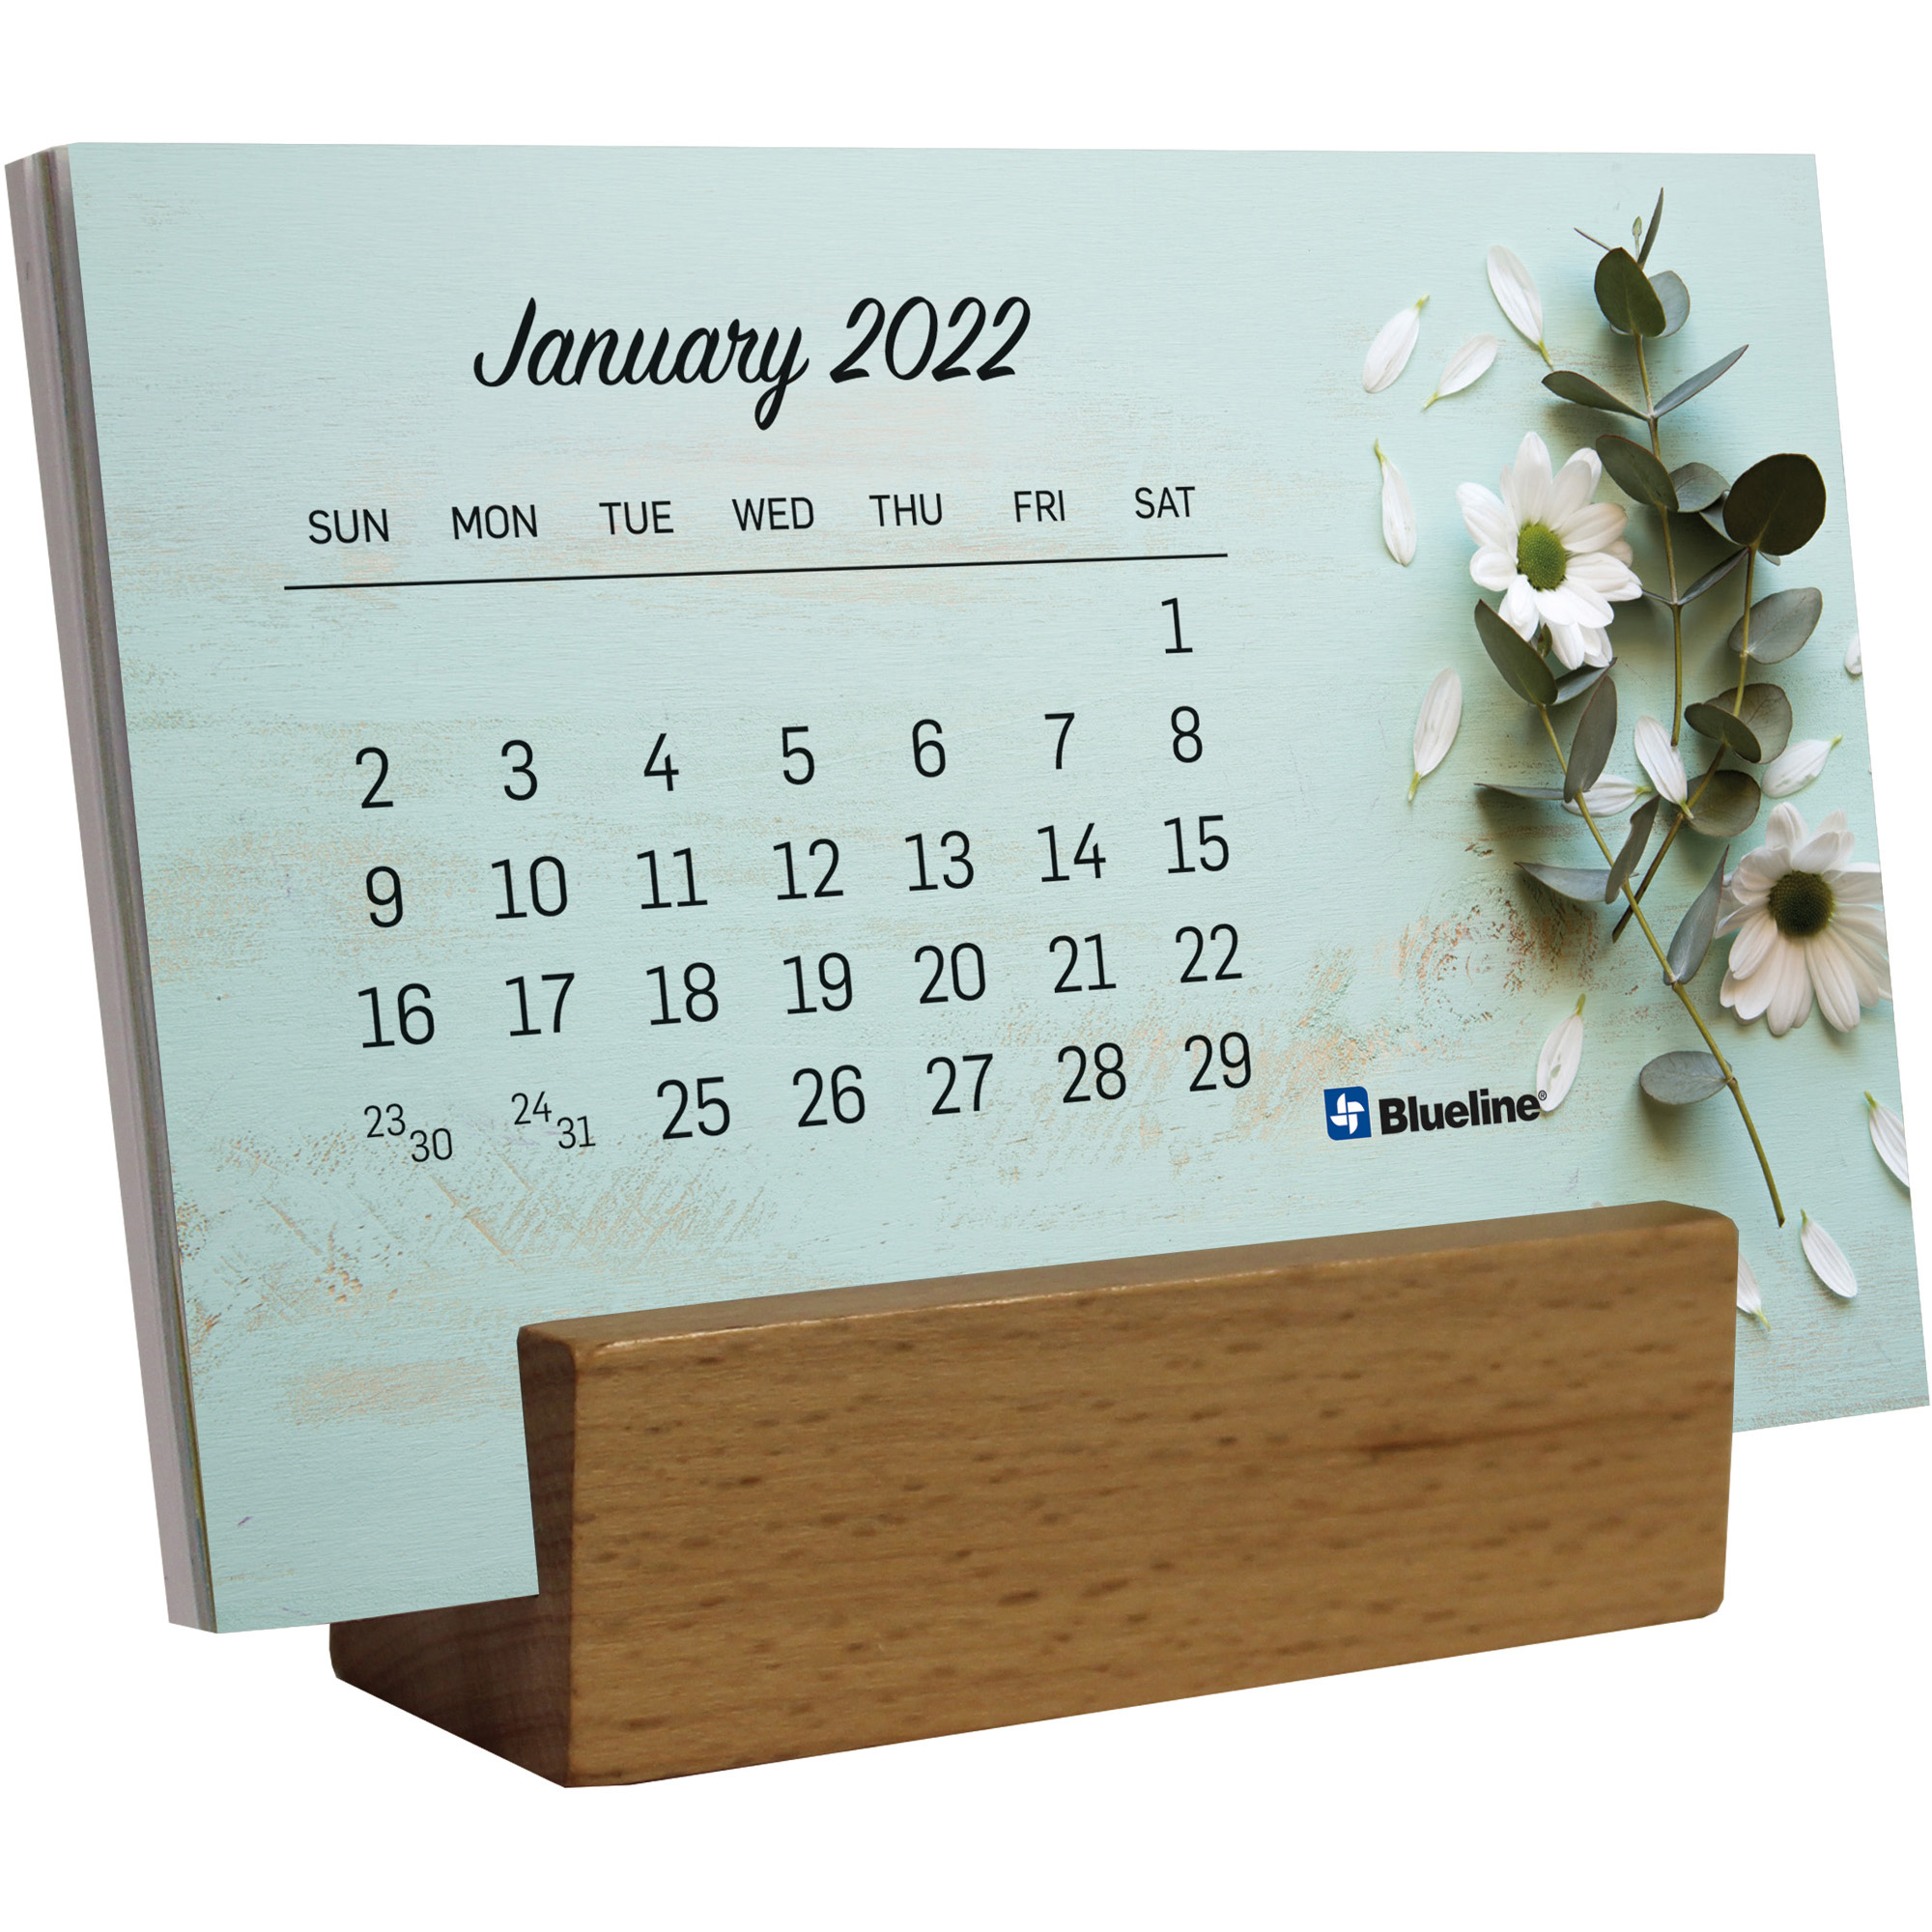 Blueline Wood Base Desk Calendar Union Office Supply Company